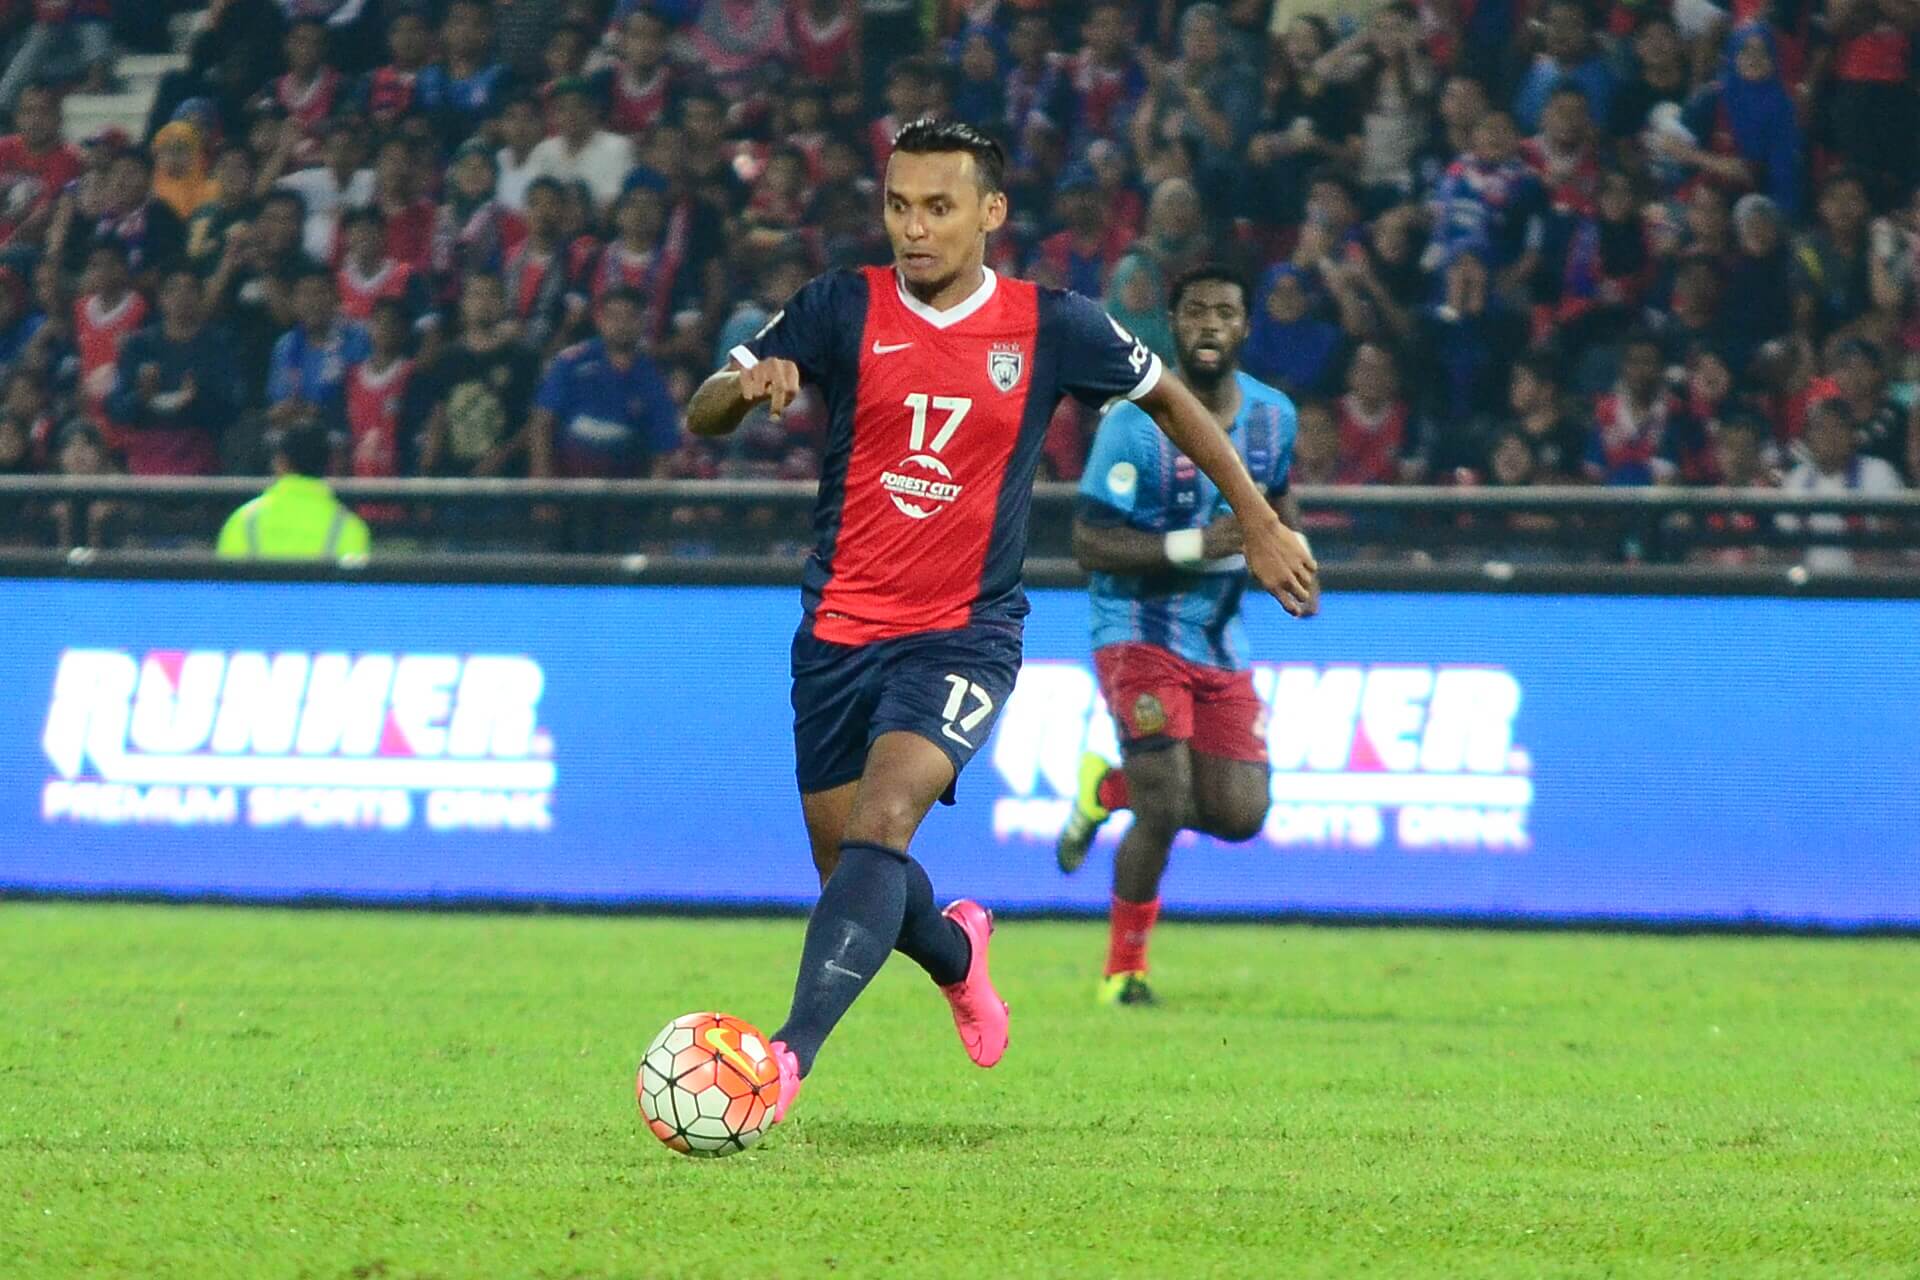 Adakah Gaji Pemain Di Liga Malaysia Terlalu Tinggi?